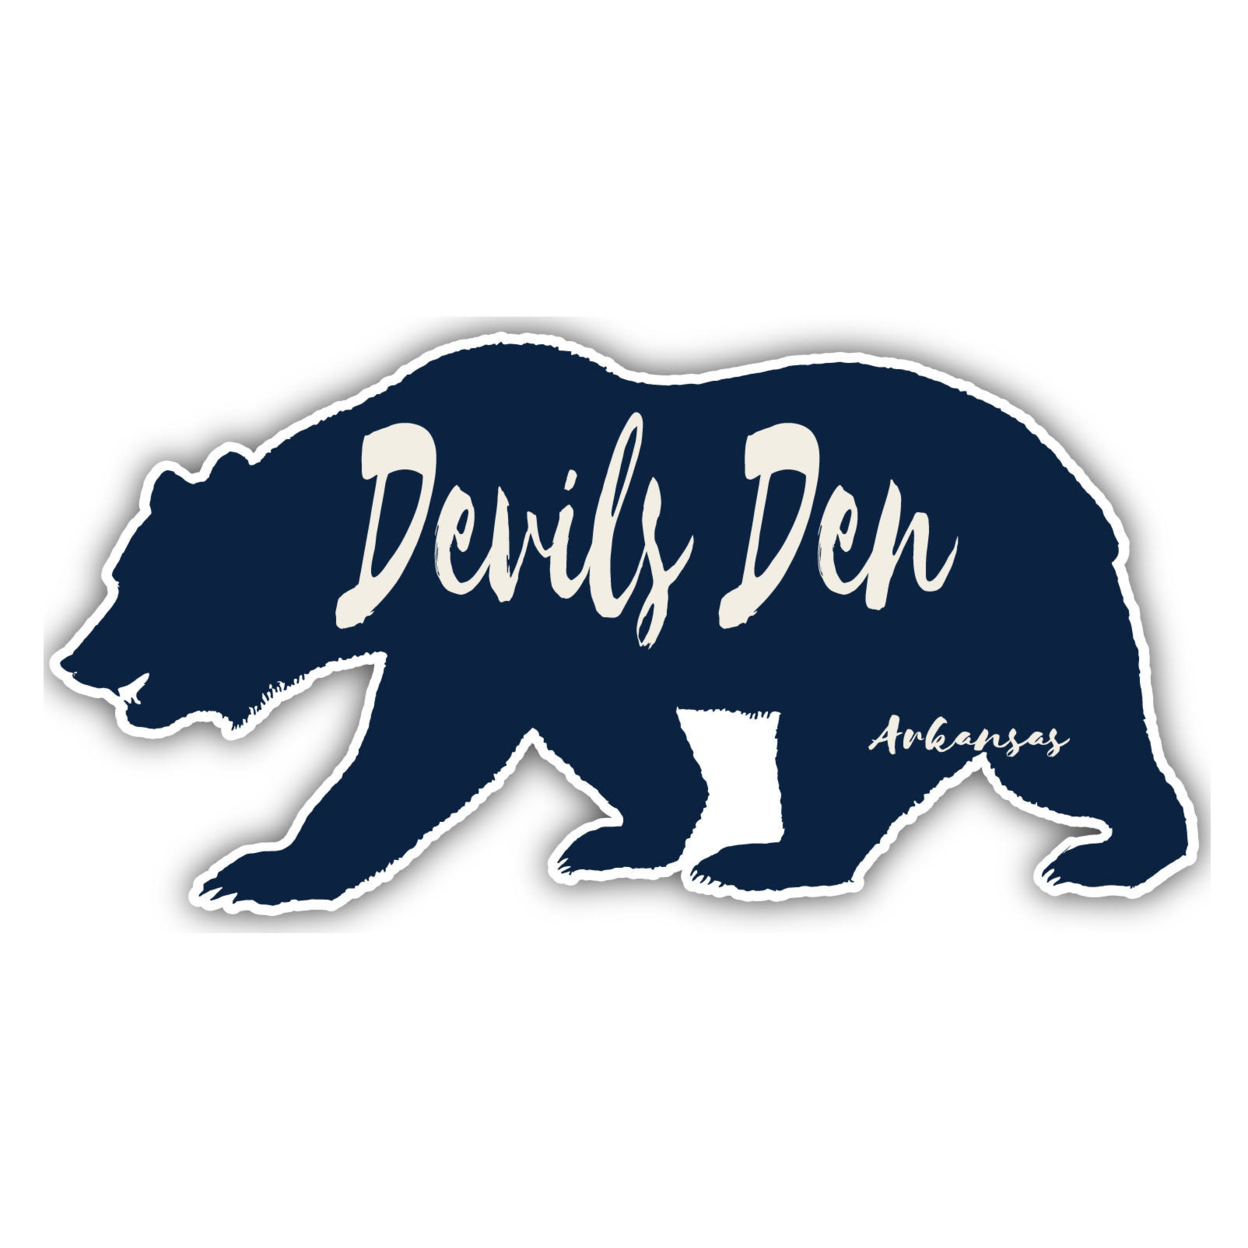 Devils Den Arkansas Souvenir Decorative Stickers (Choose Theme And Size) - 4-Pack, 8-Inch, Great Outdoors